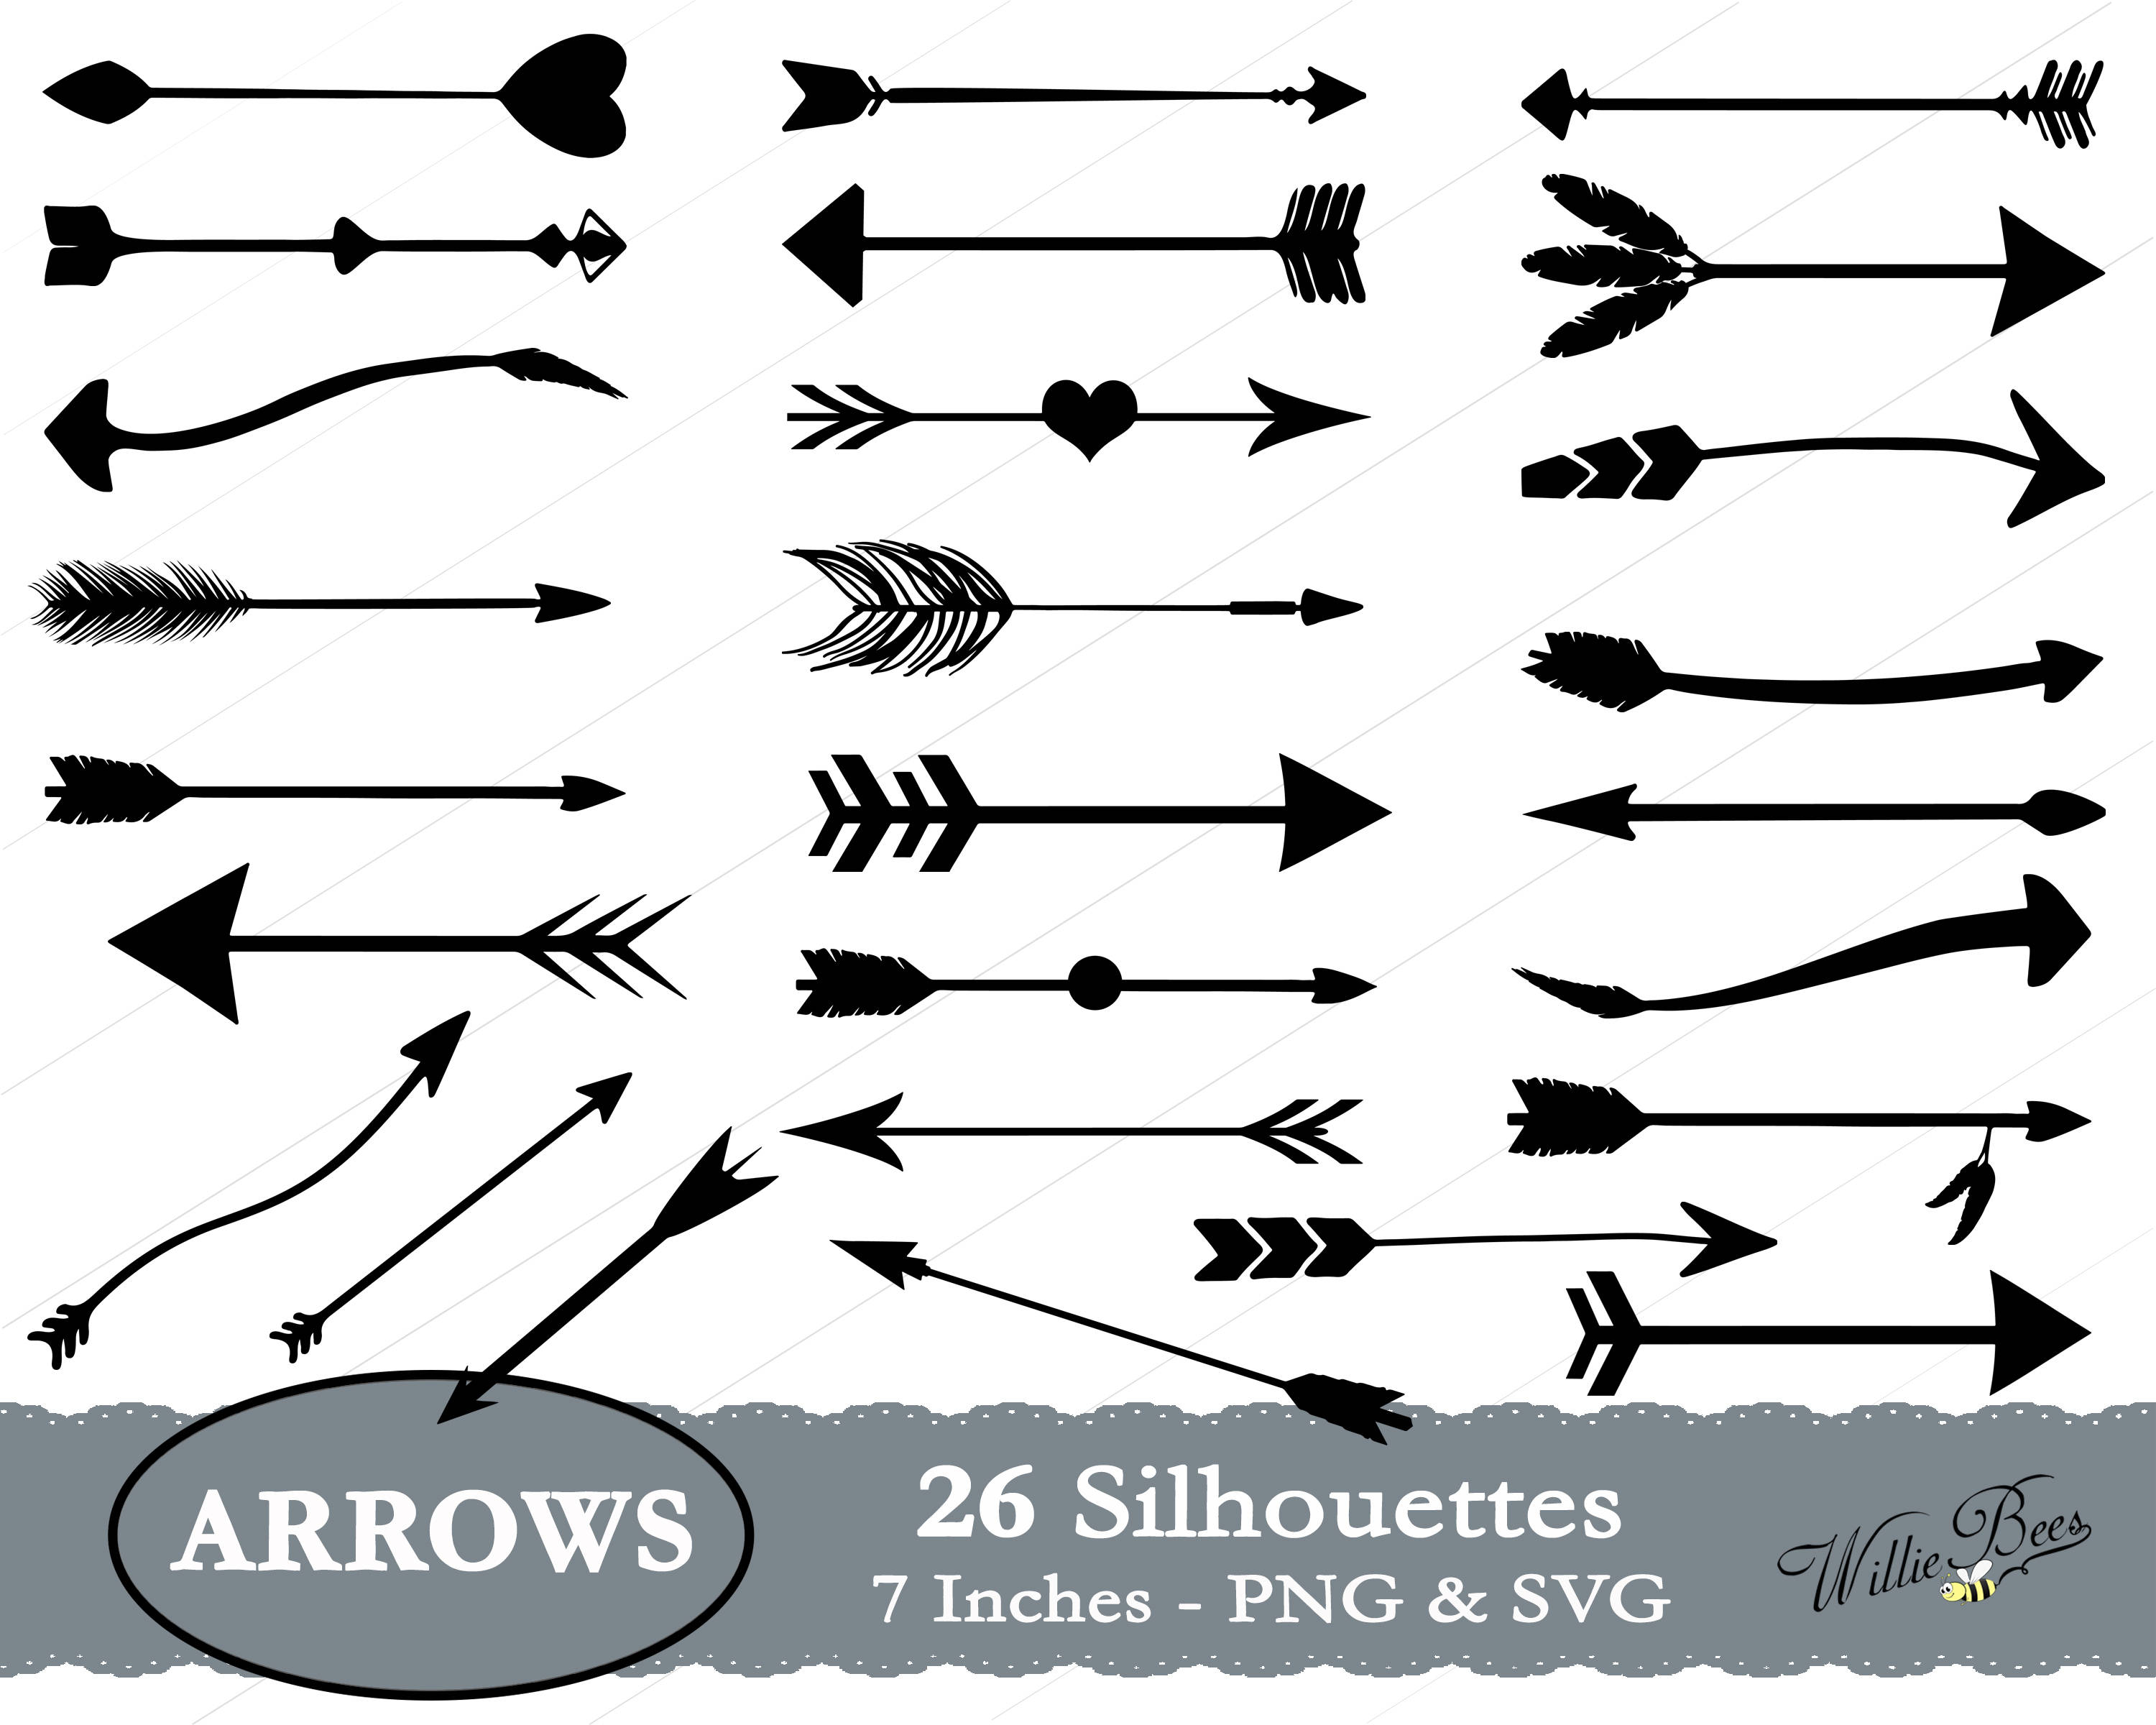 Download Arrow SVG Arrow Silhouette Tribal Arrows Arrow Clipart